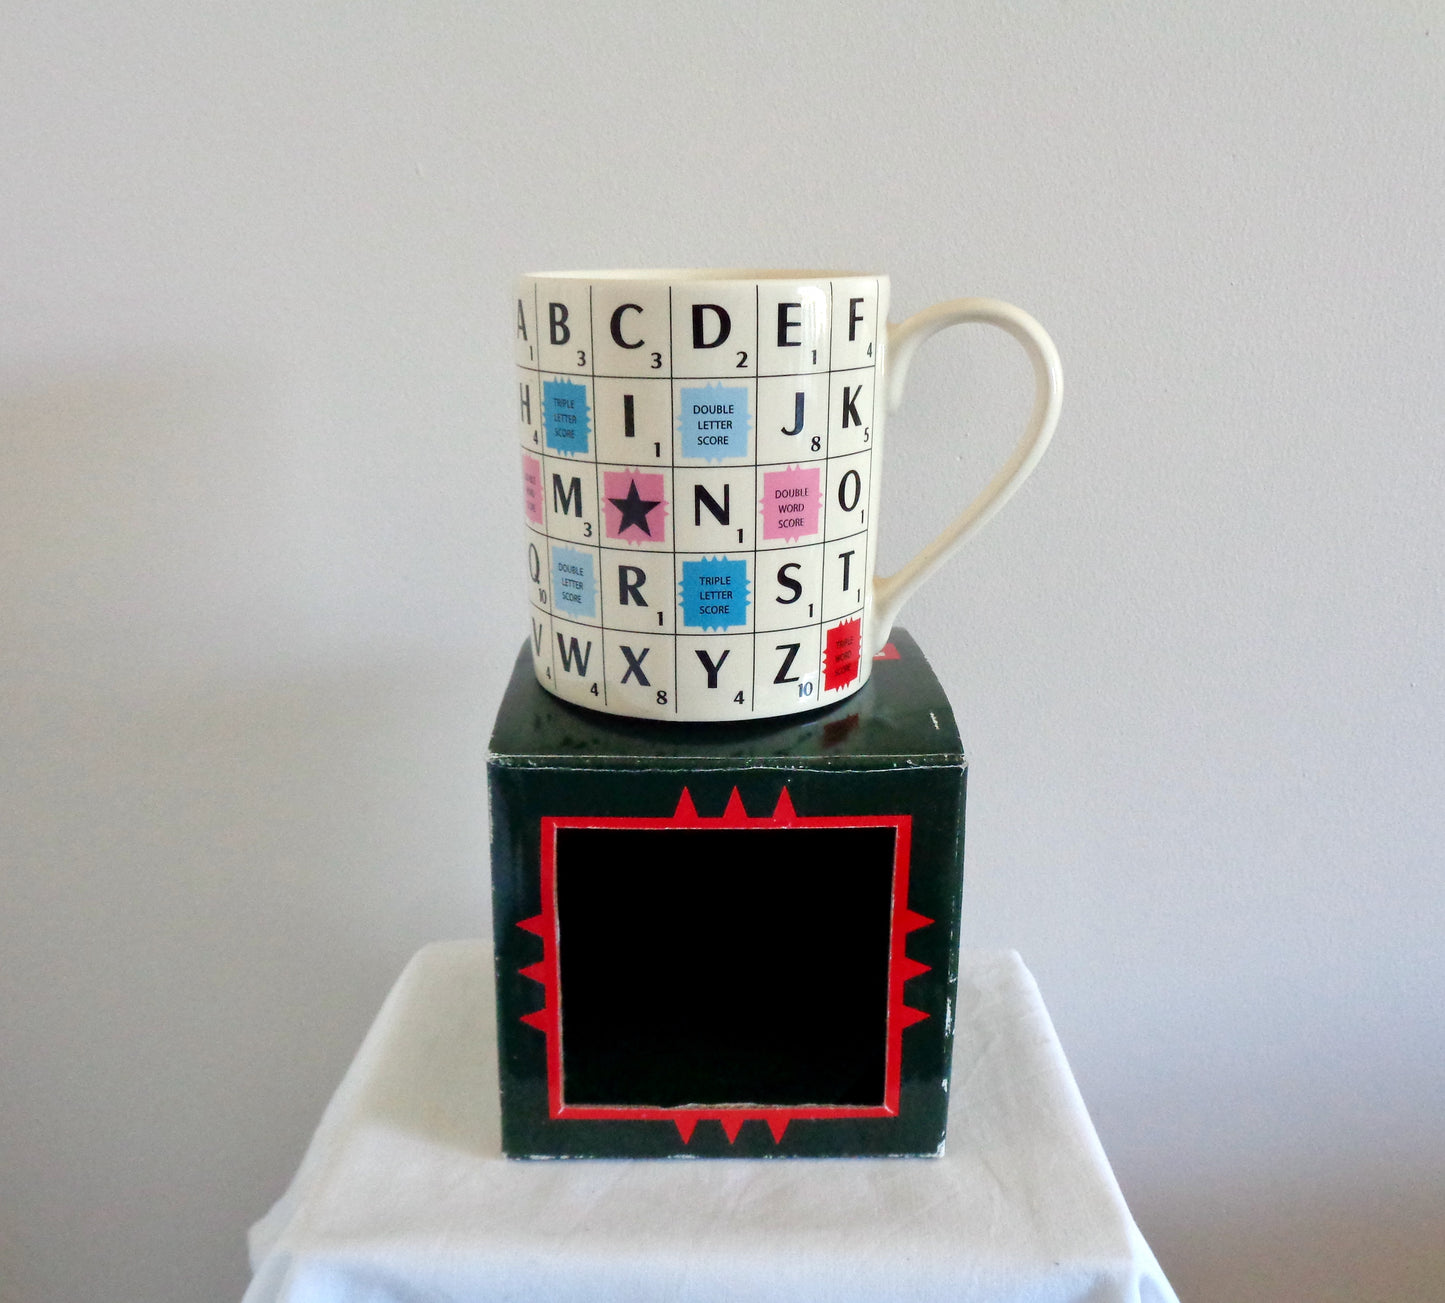 2013 Wild & Wolf Scrabble Alphabet Tile Mug In Its Original Box